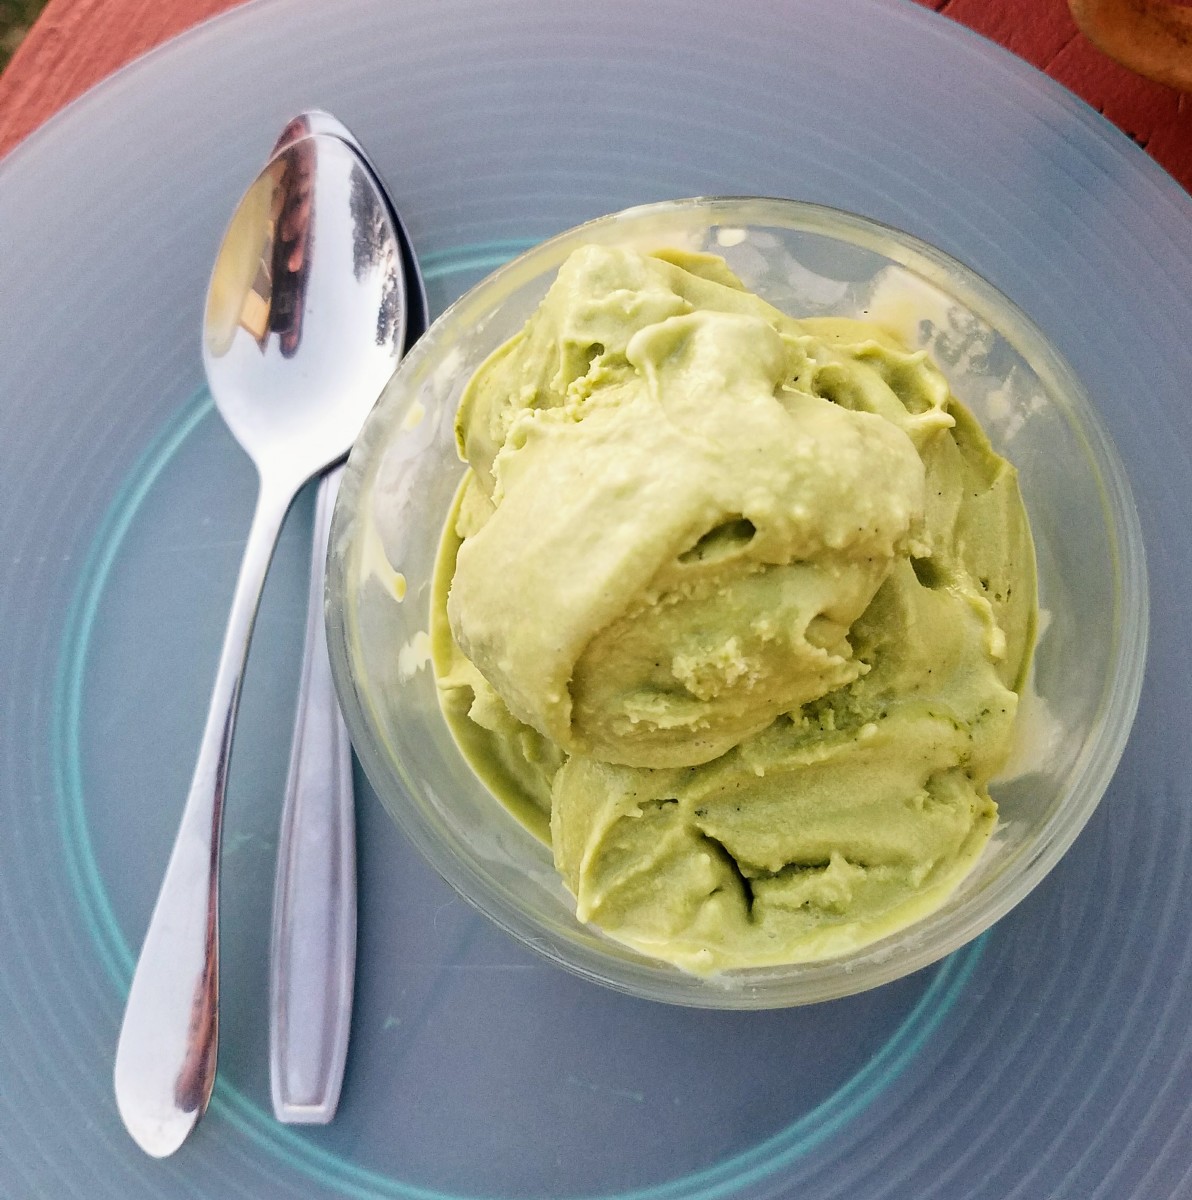 Creamy pistachio gelato